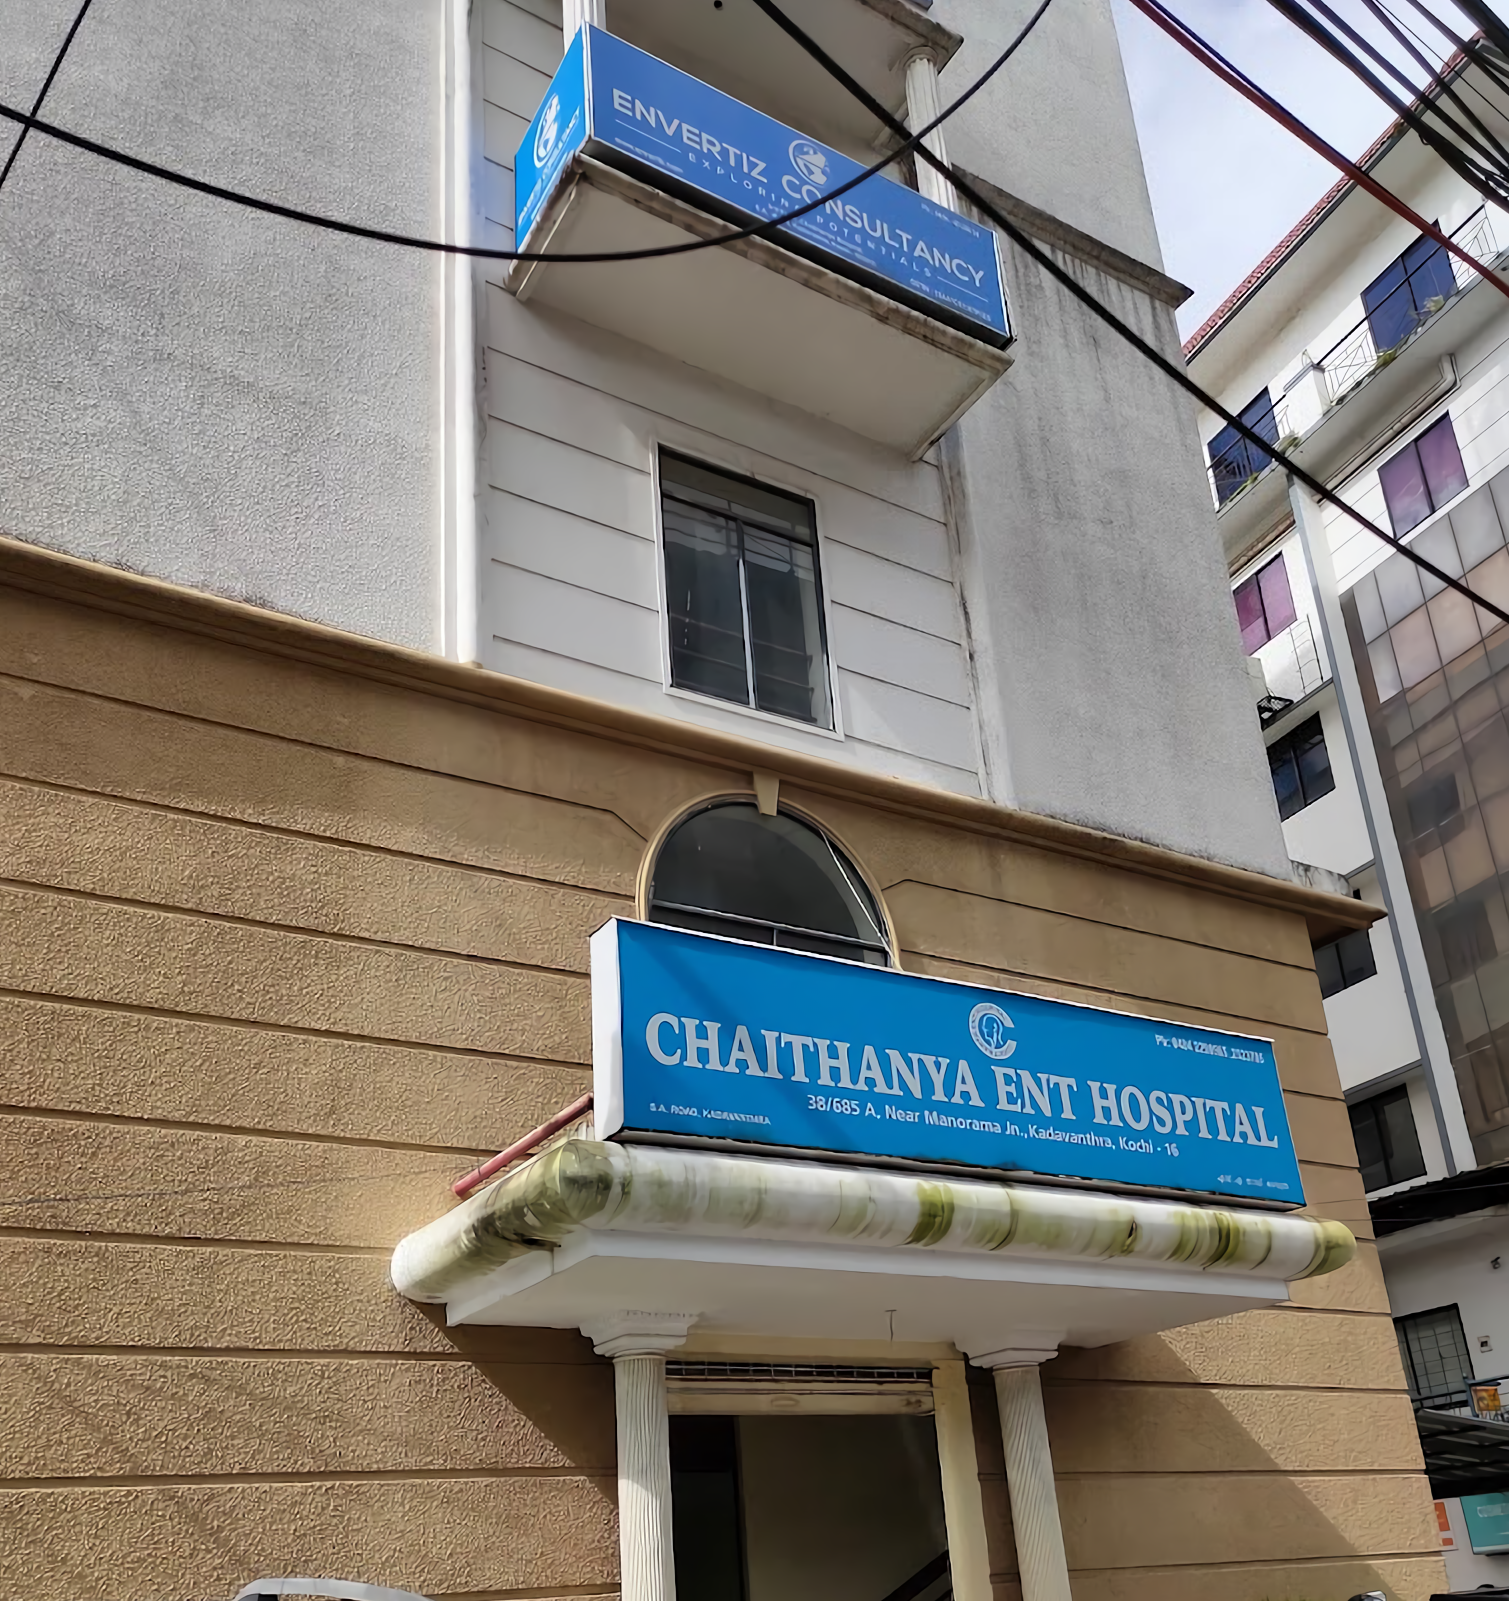 Chaithanya ENT Hospital